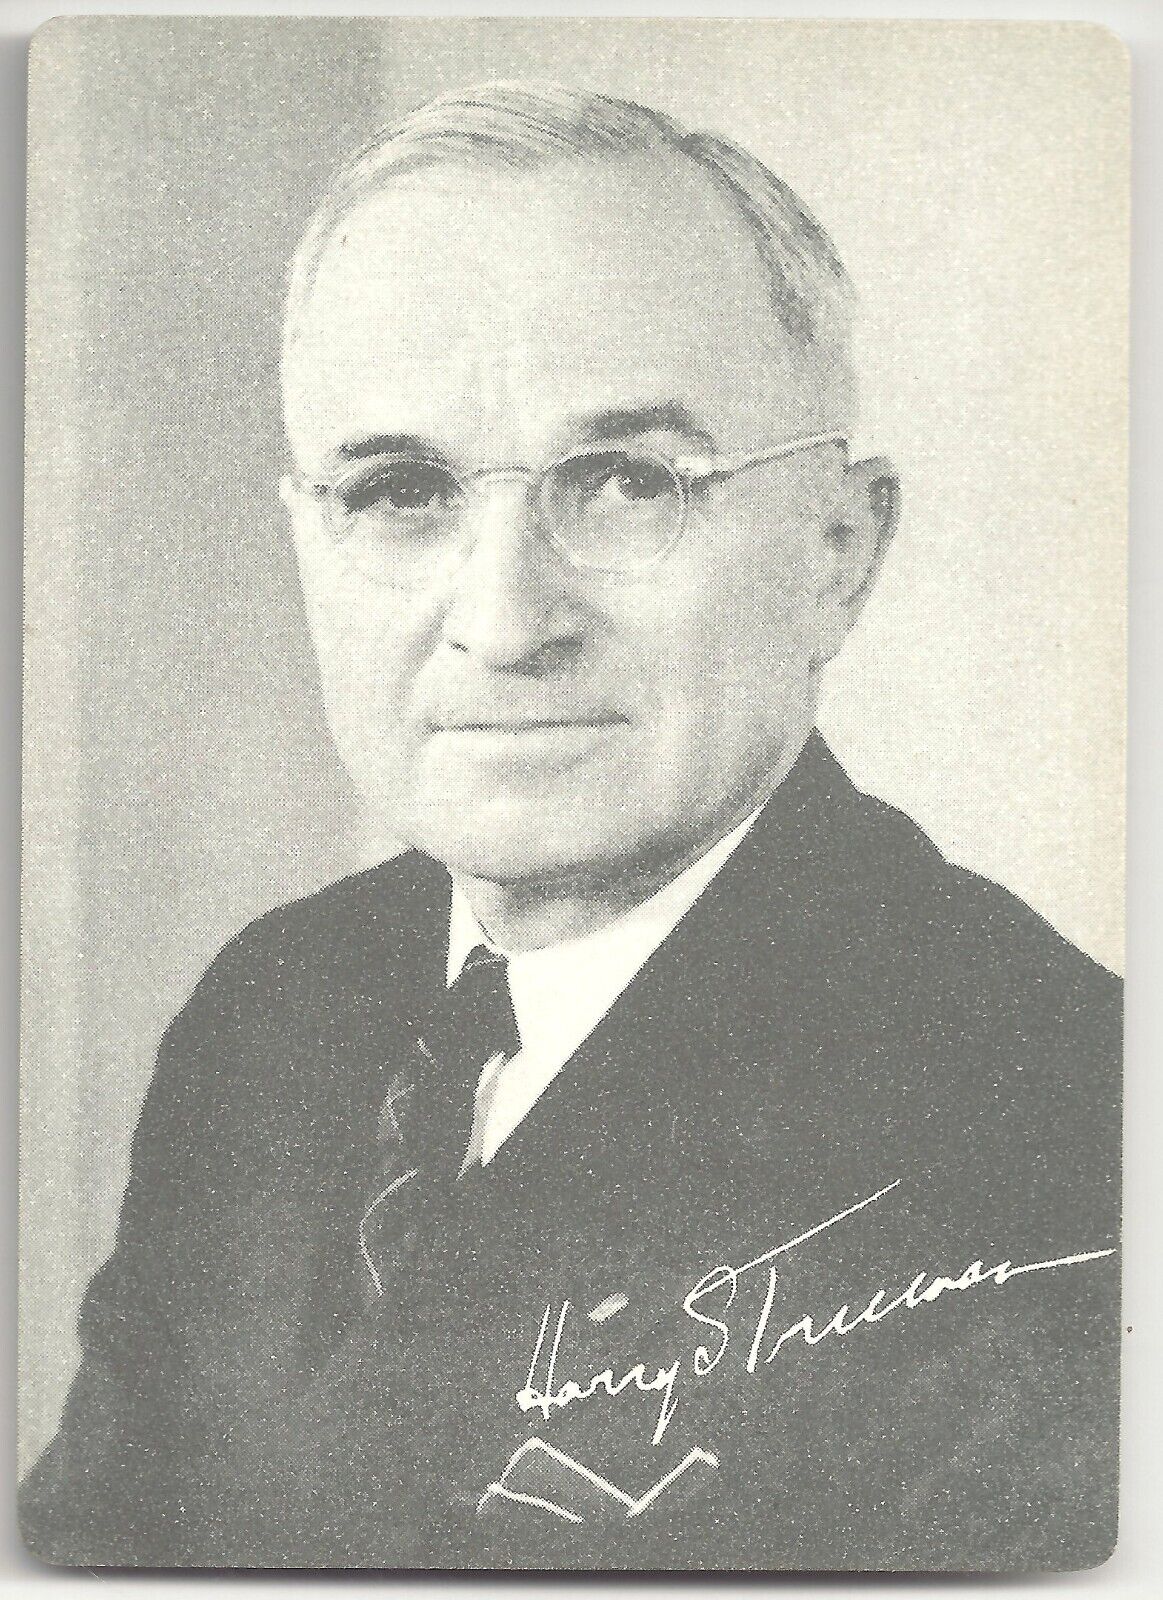 Harry Truman Palm Card 1948 Democratic Nat'l Comm. w/ Electoral Votes on Rev.